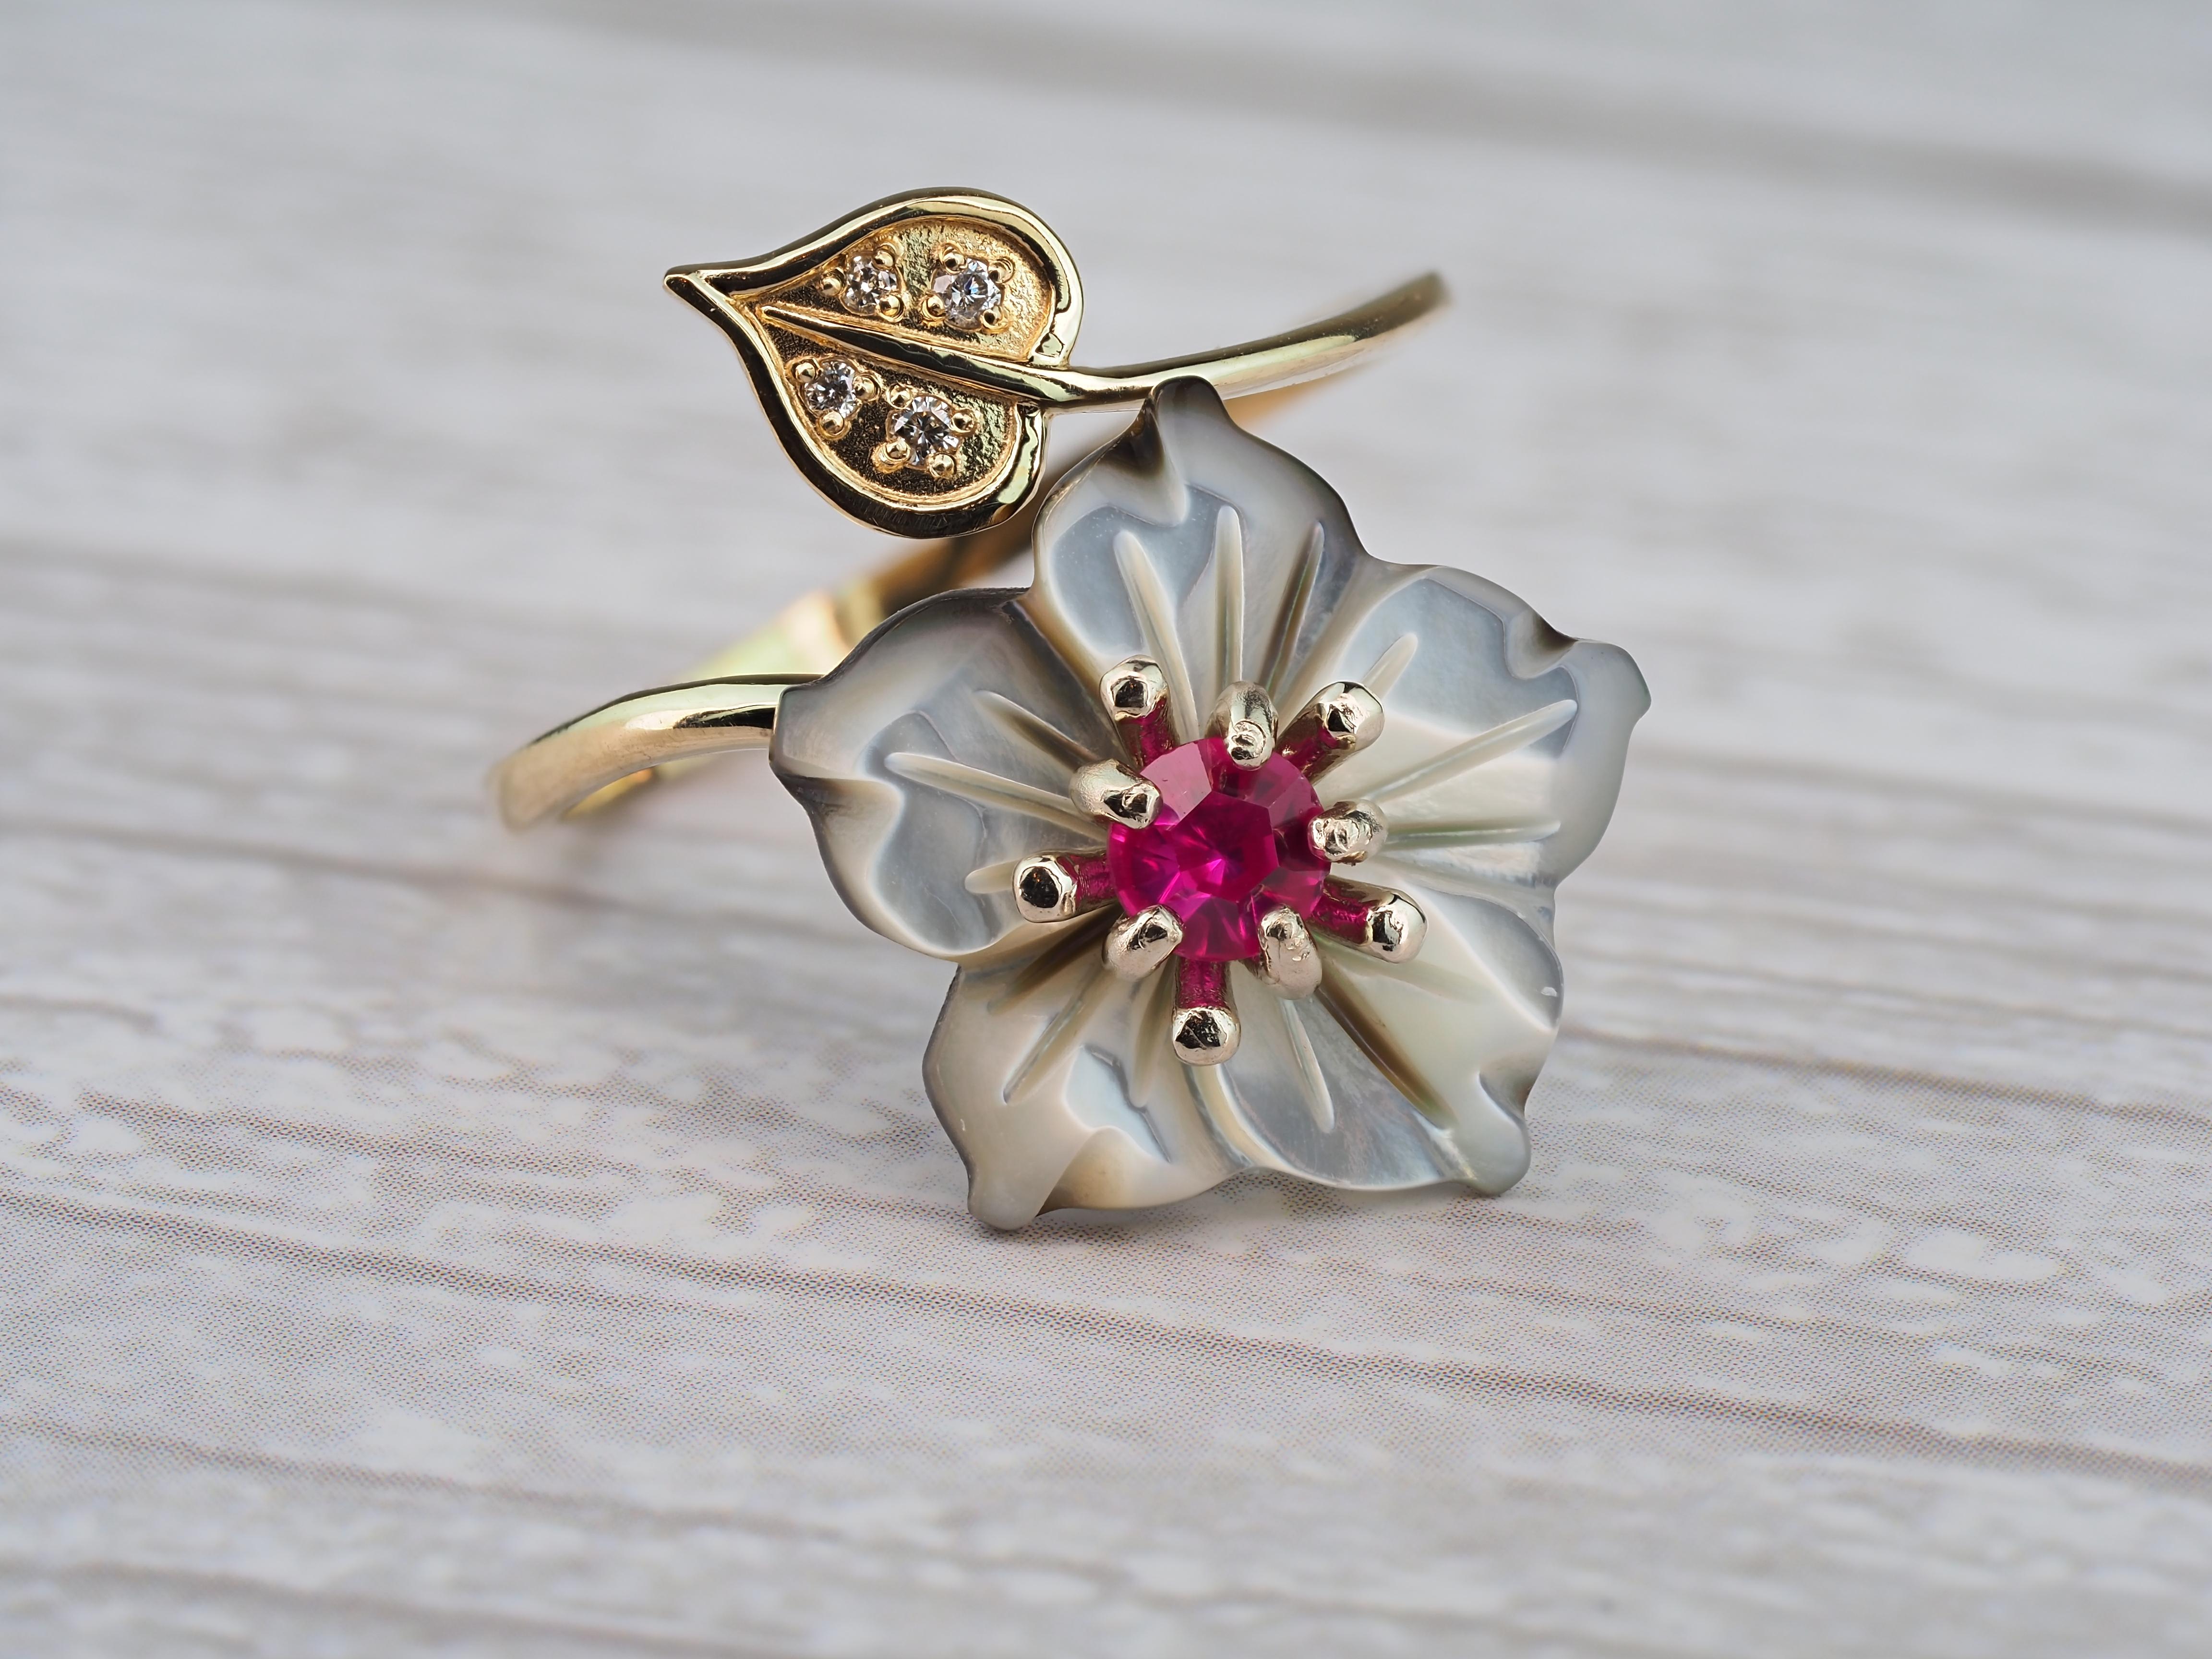 Carved Flower 14k ring with gemstones For Sale 3